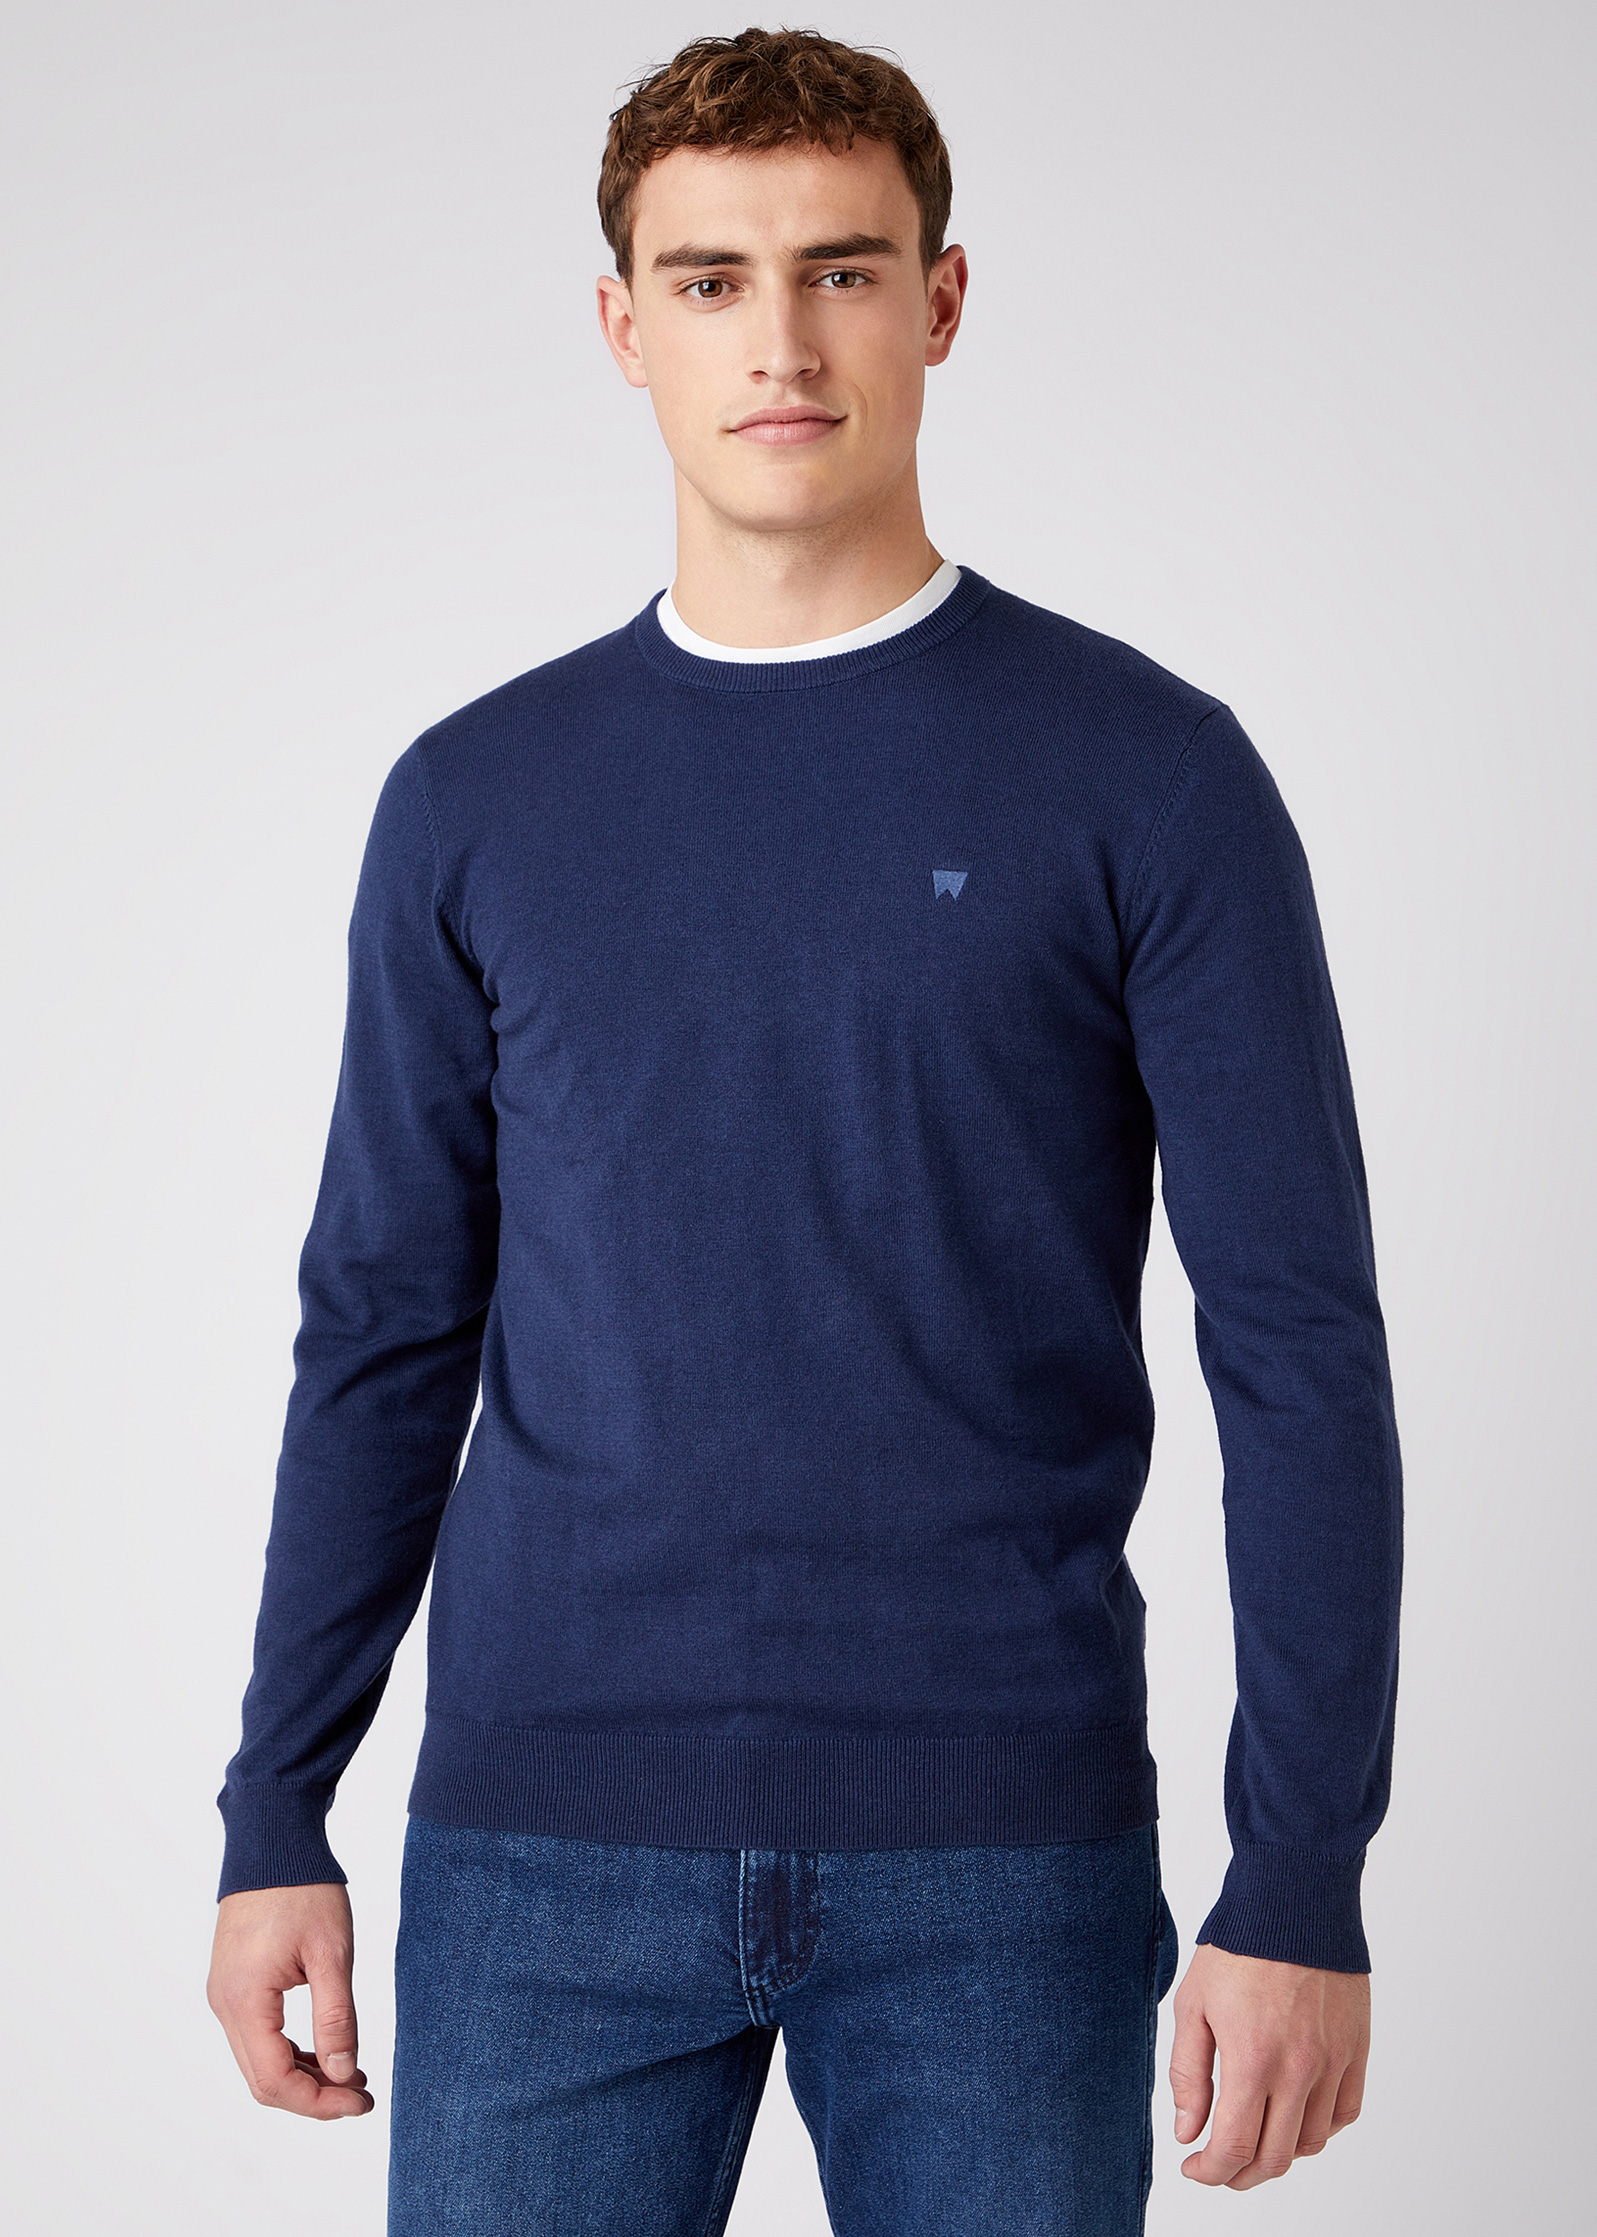 Men's Sweater Wrangler® Crewneck Knit - Navy W8A02P114 / Navy